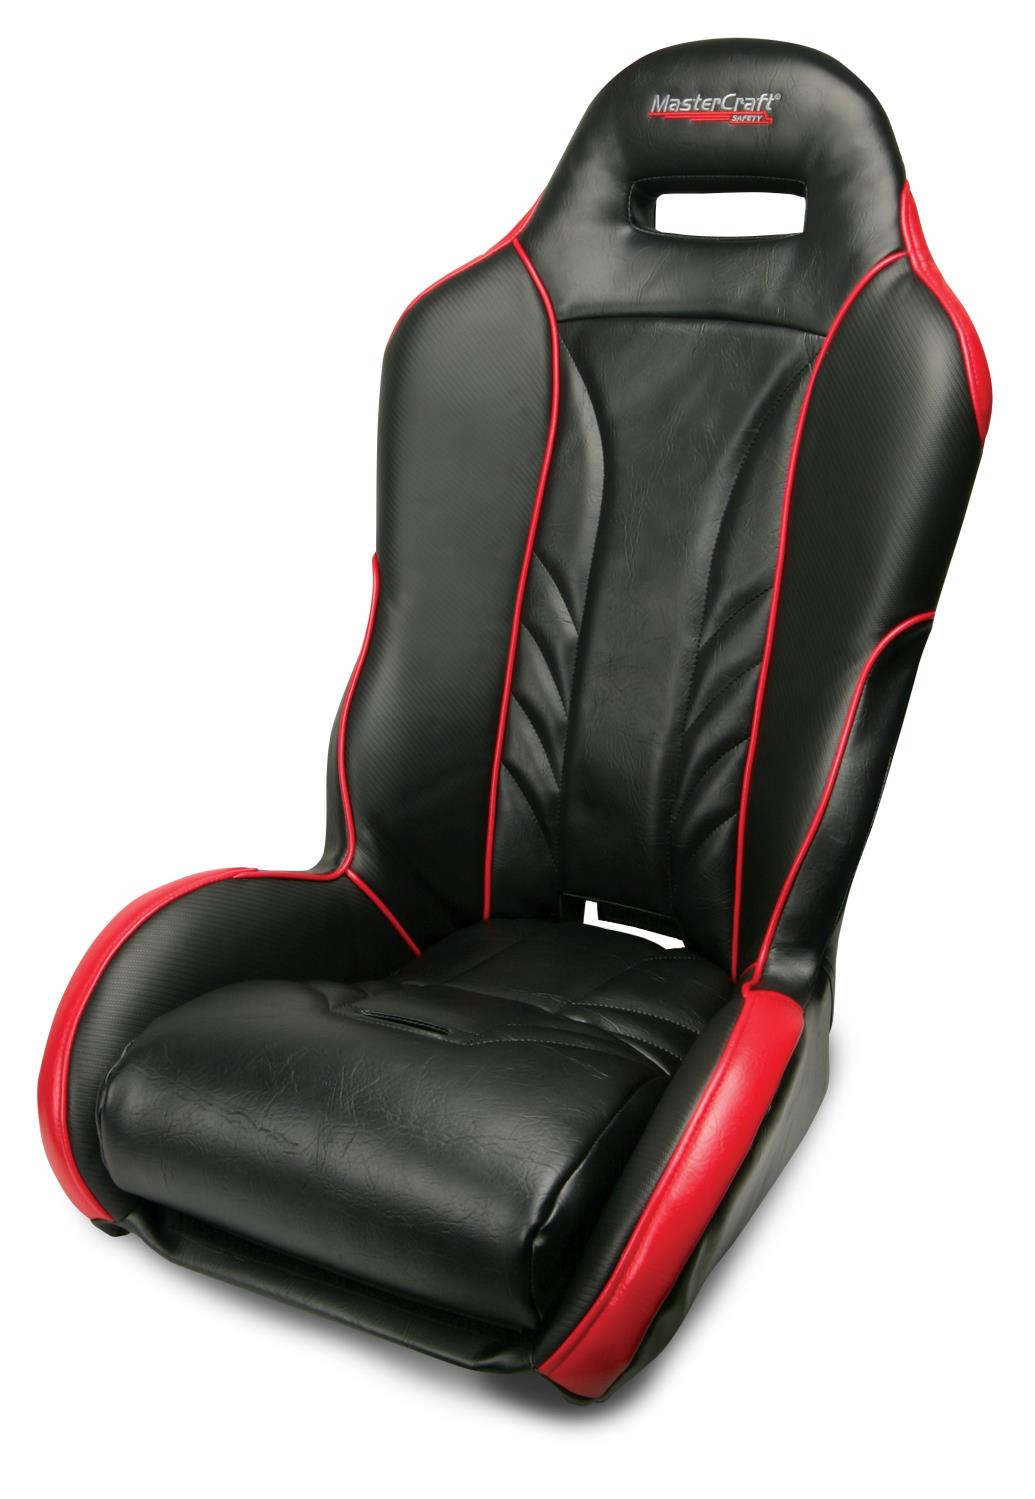 573402 S2/4 w/Fixed Headrest, All Vinyl Black w/Black Center & Black Side Panels, Red Trim, Universal